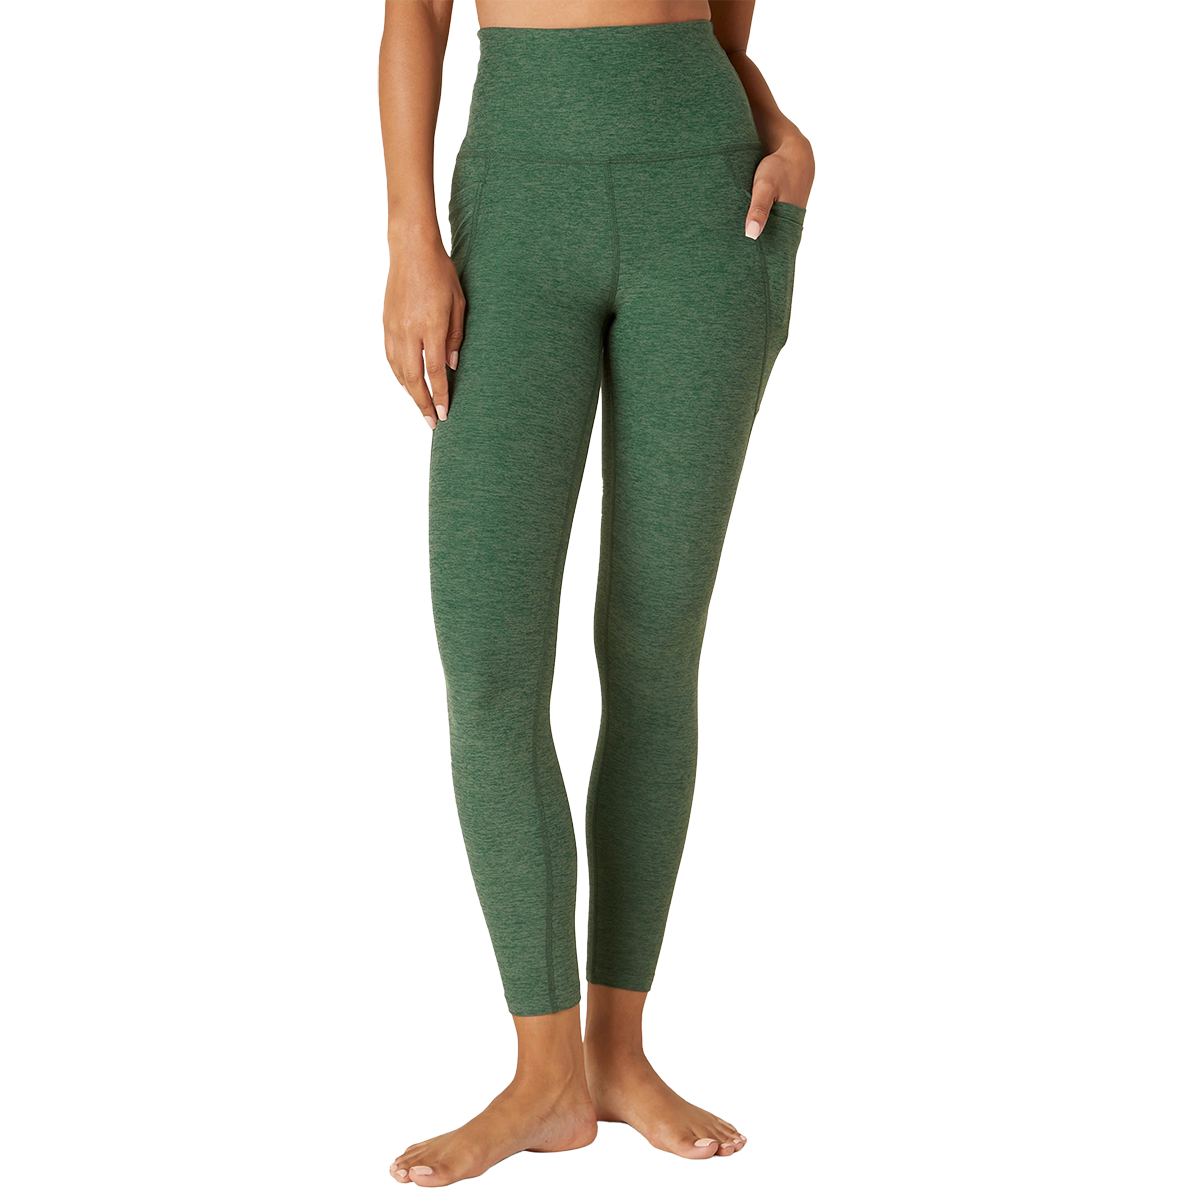 Women's High Waist Capri Pocket Yoga Pants - Space Dye Charcoal